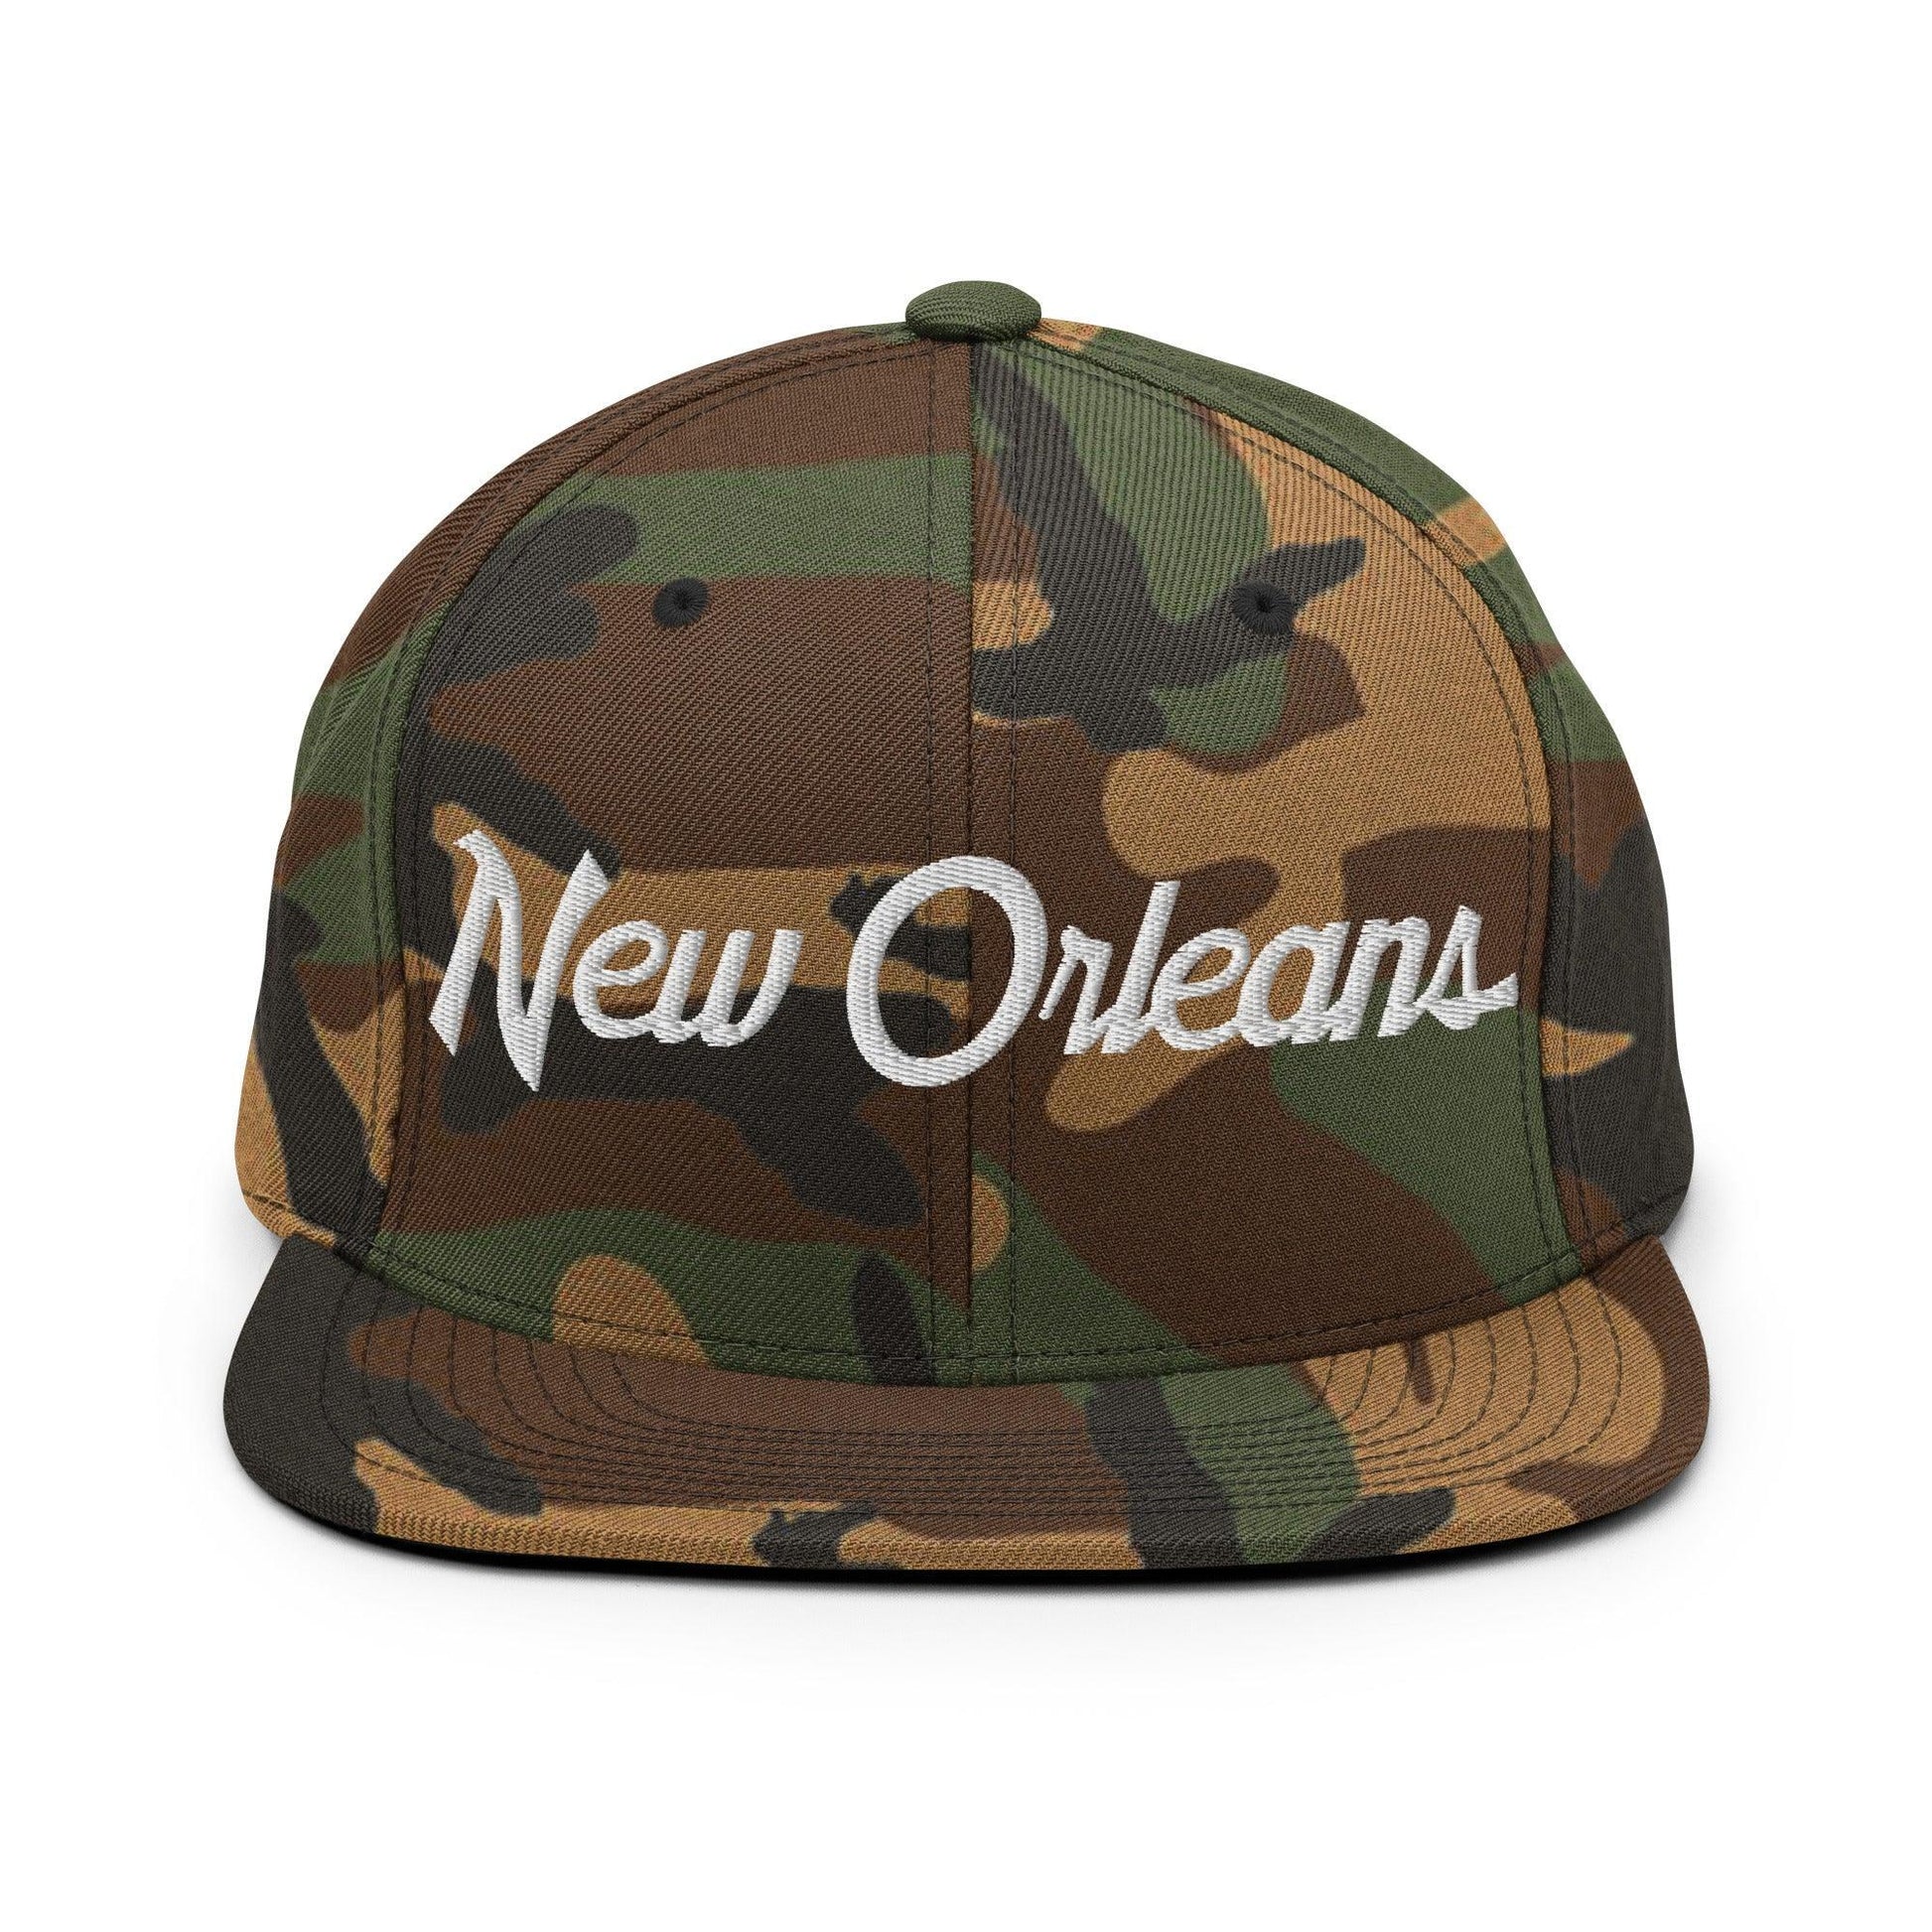 New Orleans Script Snapback Hat Green Camo